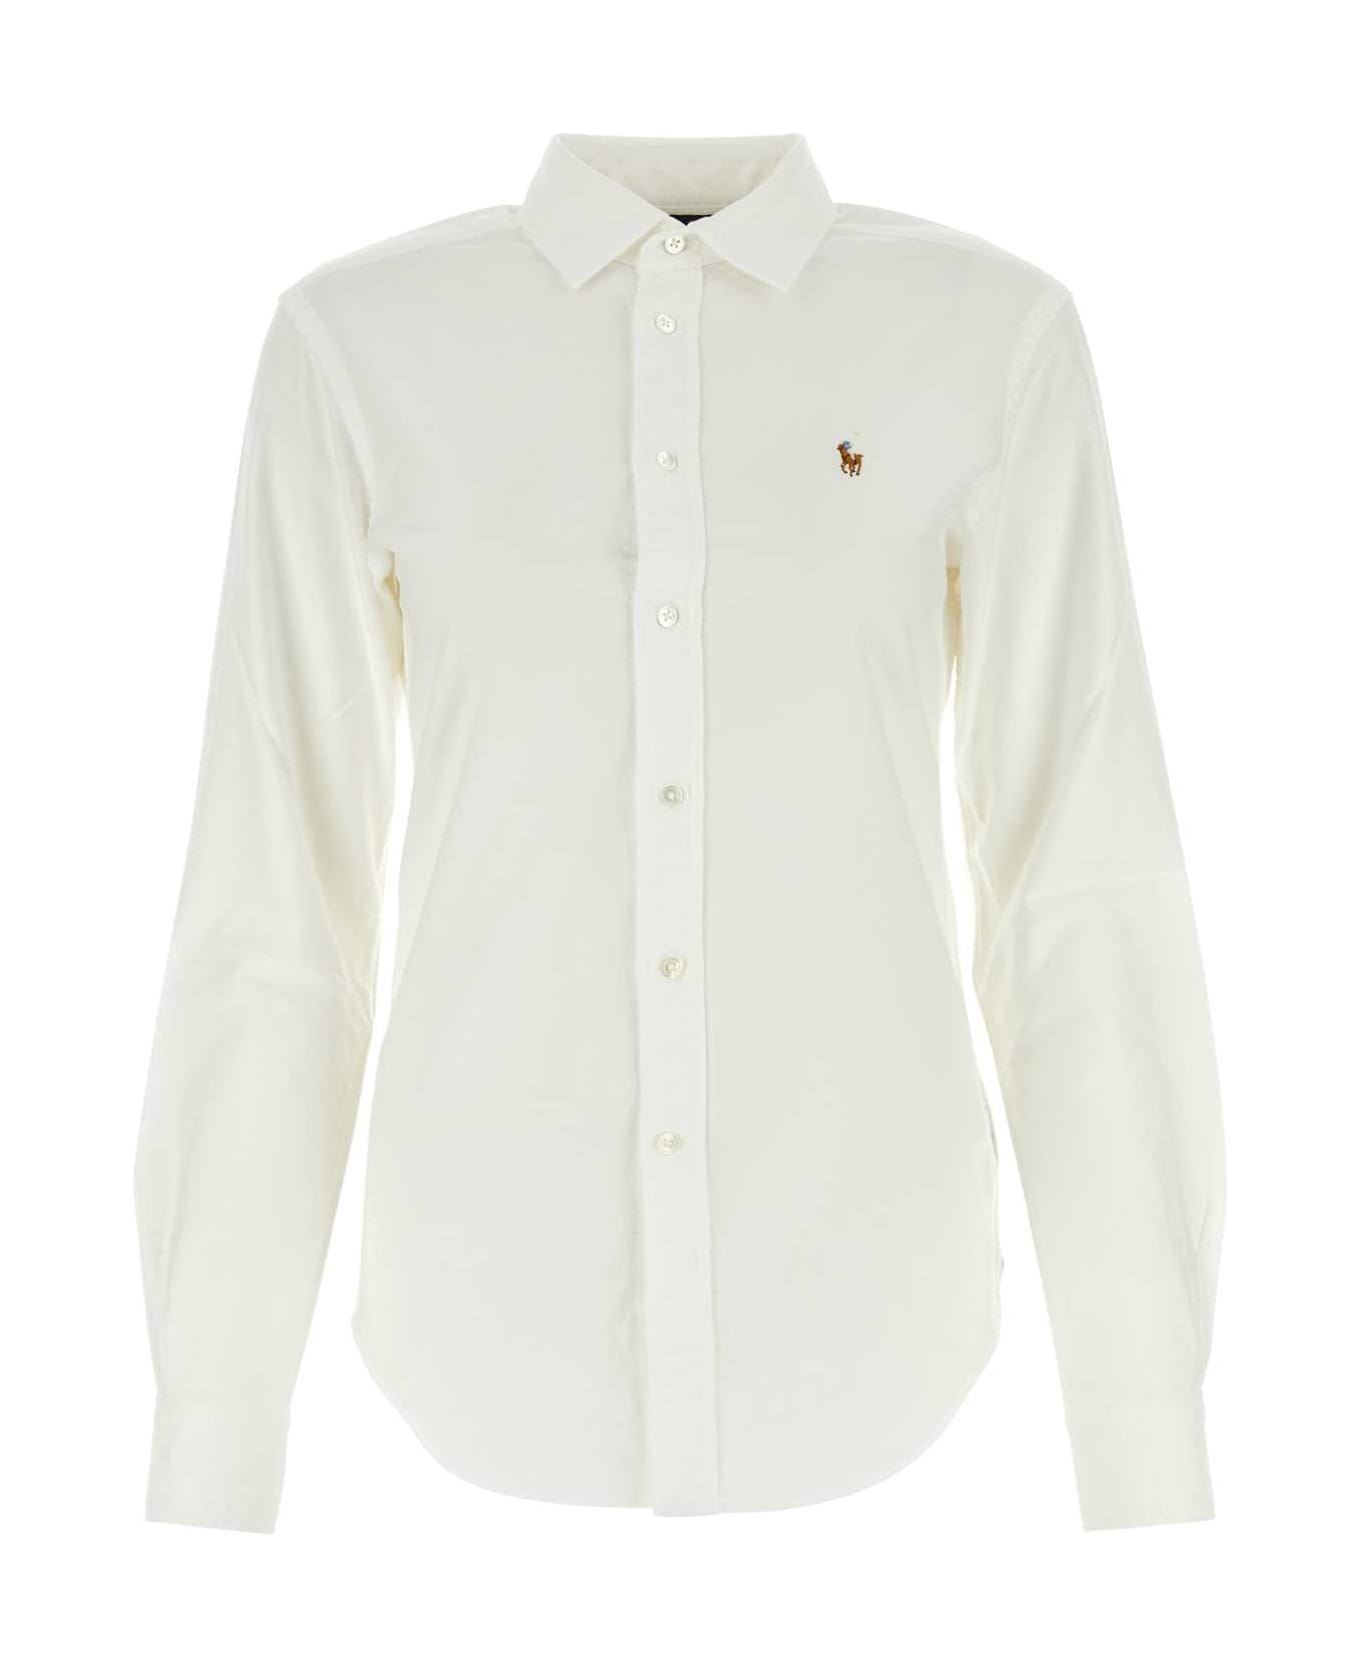 Polo Ralph Lauren White Oxford Shirt - 003 シャツ